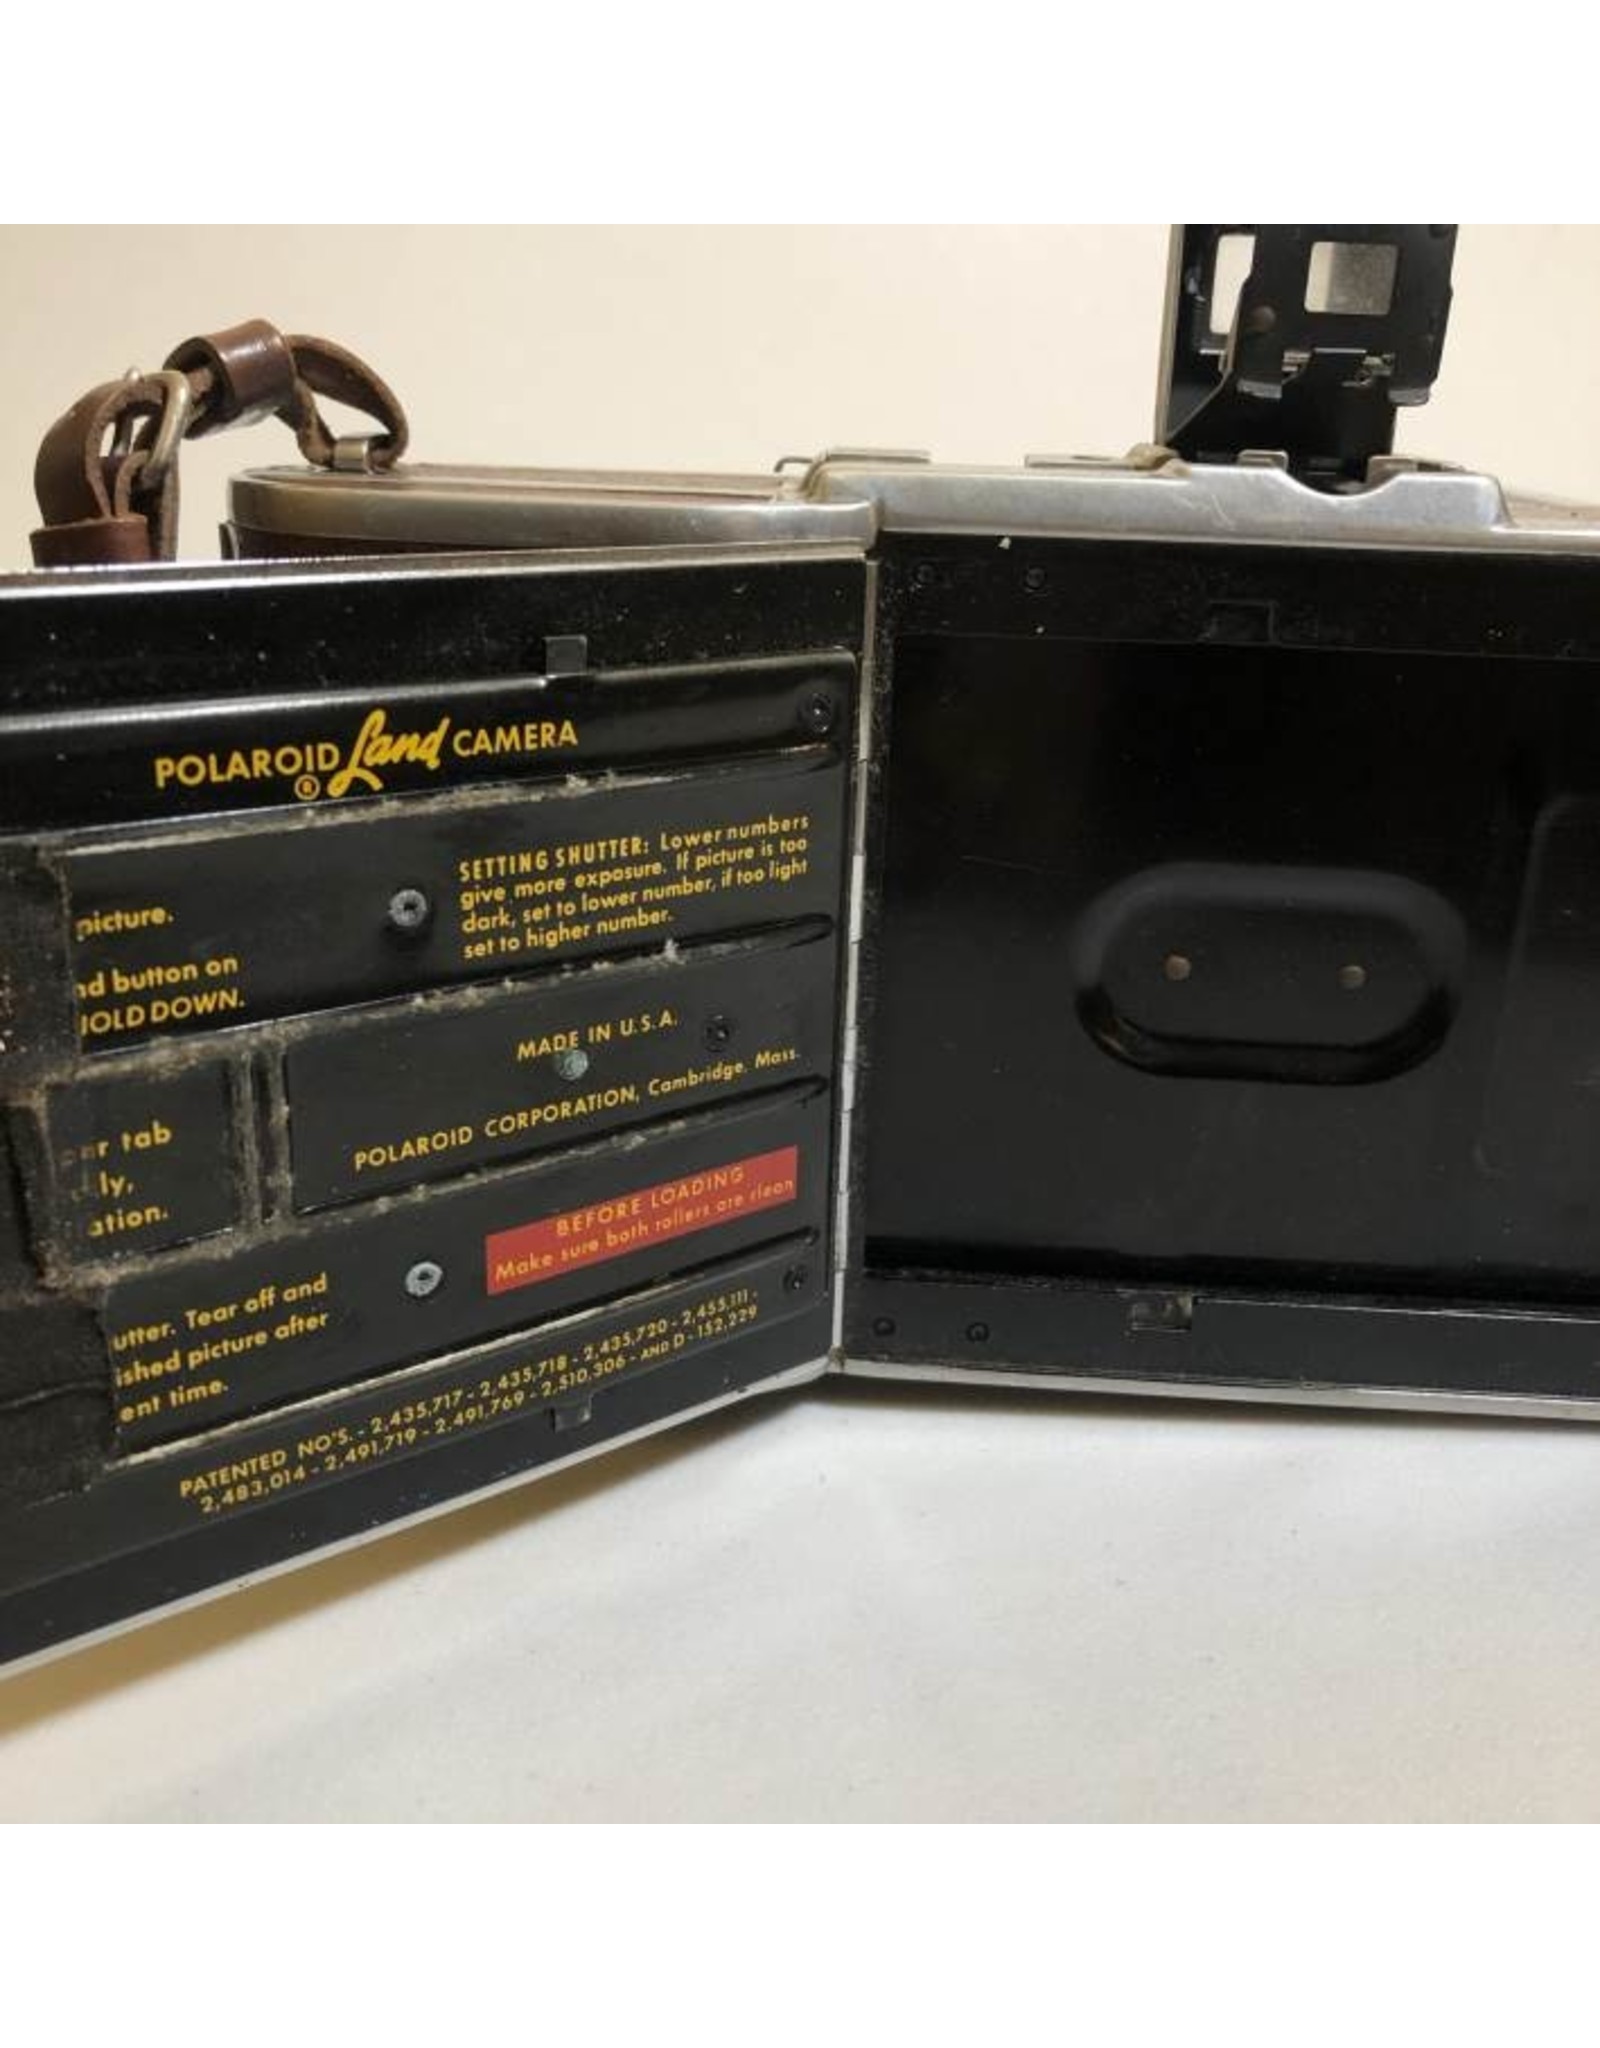 Camera - Polaroid Land Camera Model 95 folding